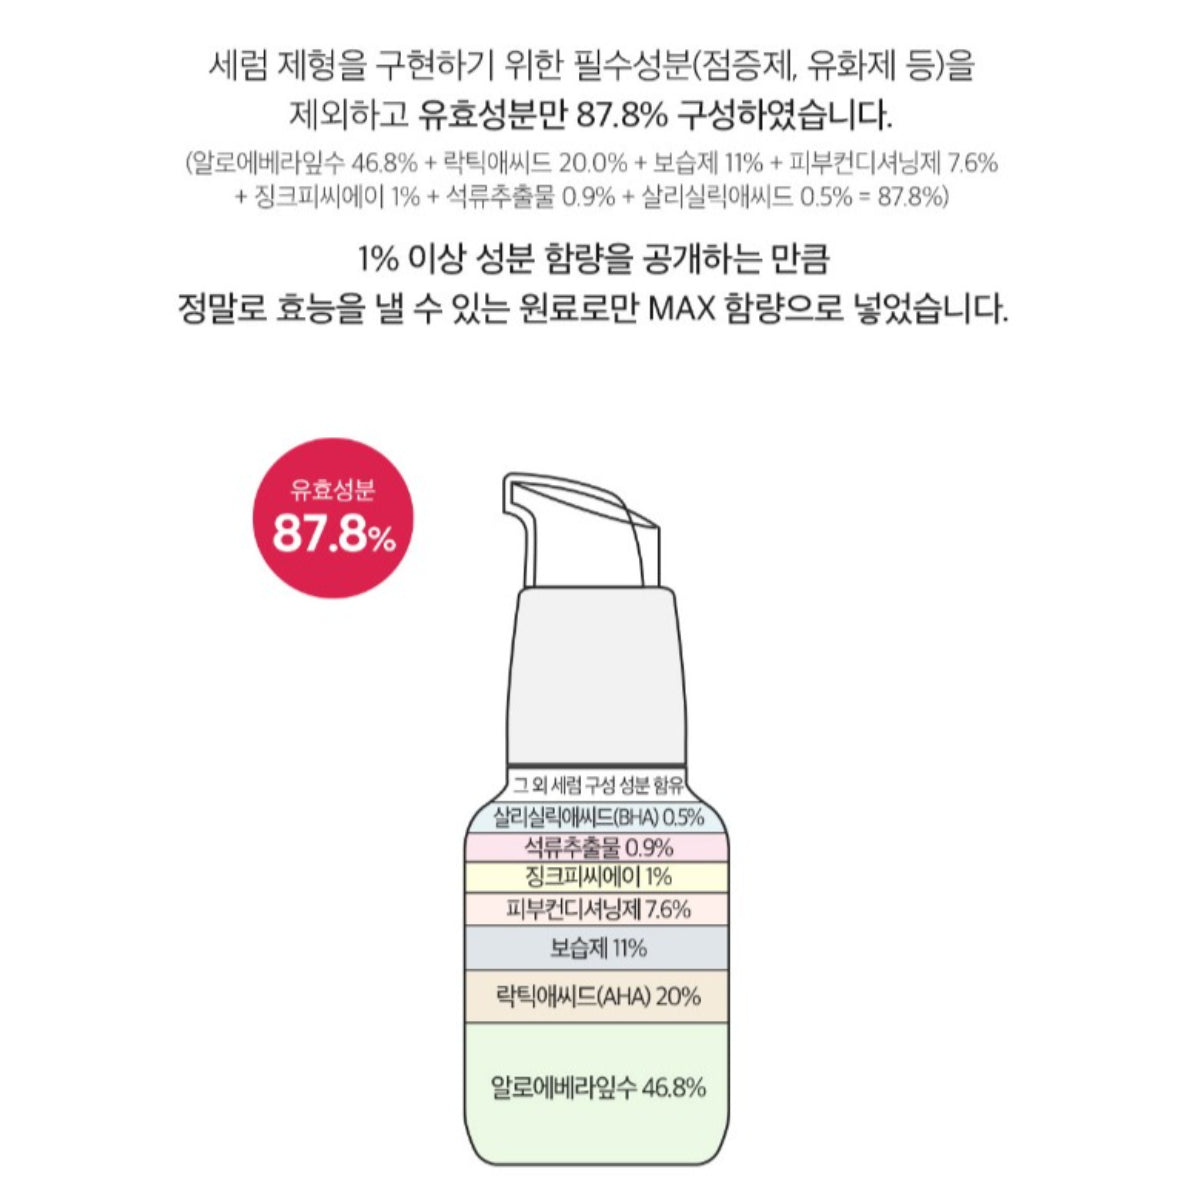 DERMA FACTORY Red Acne Peel Serum 30ml/bottle Home Peeling AHA Exfoliation Care Wash-off Peeling Treatment / from Seoul, Korea